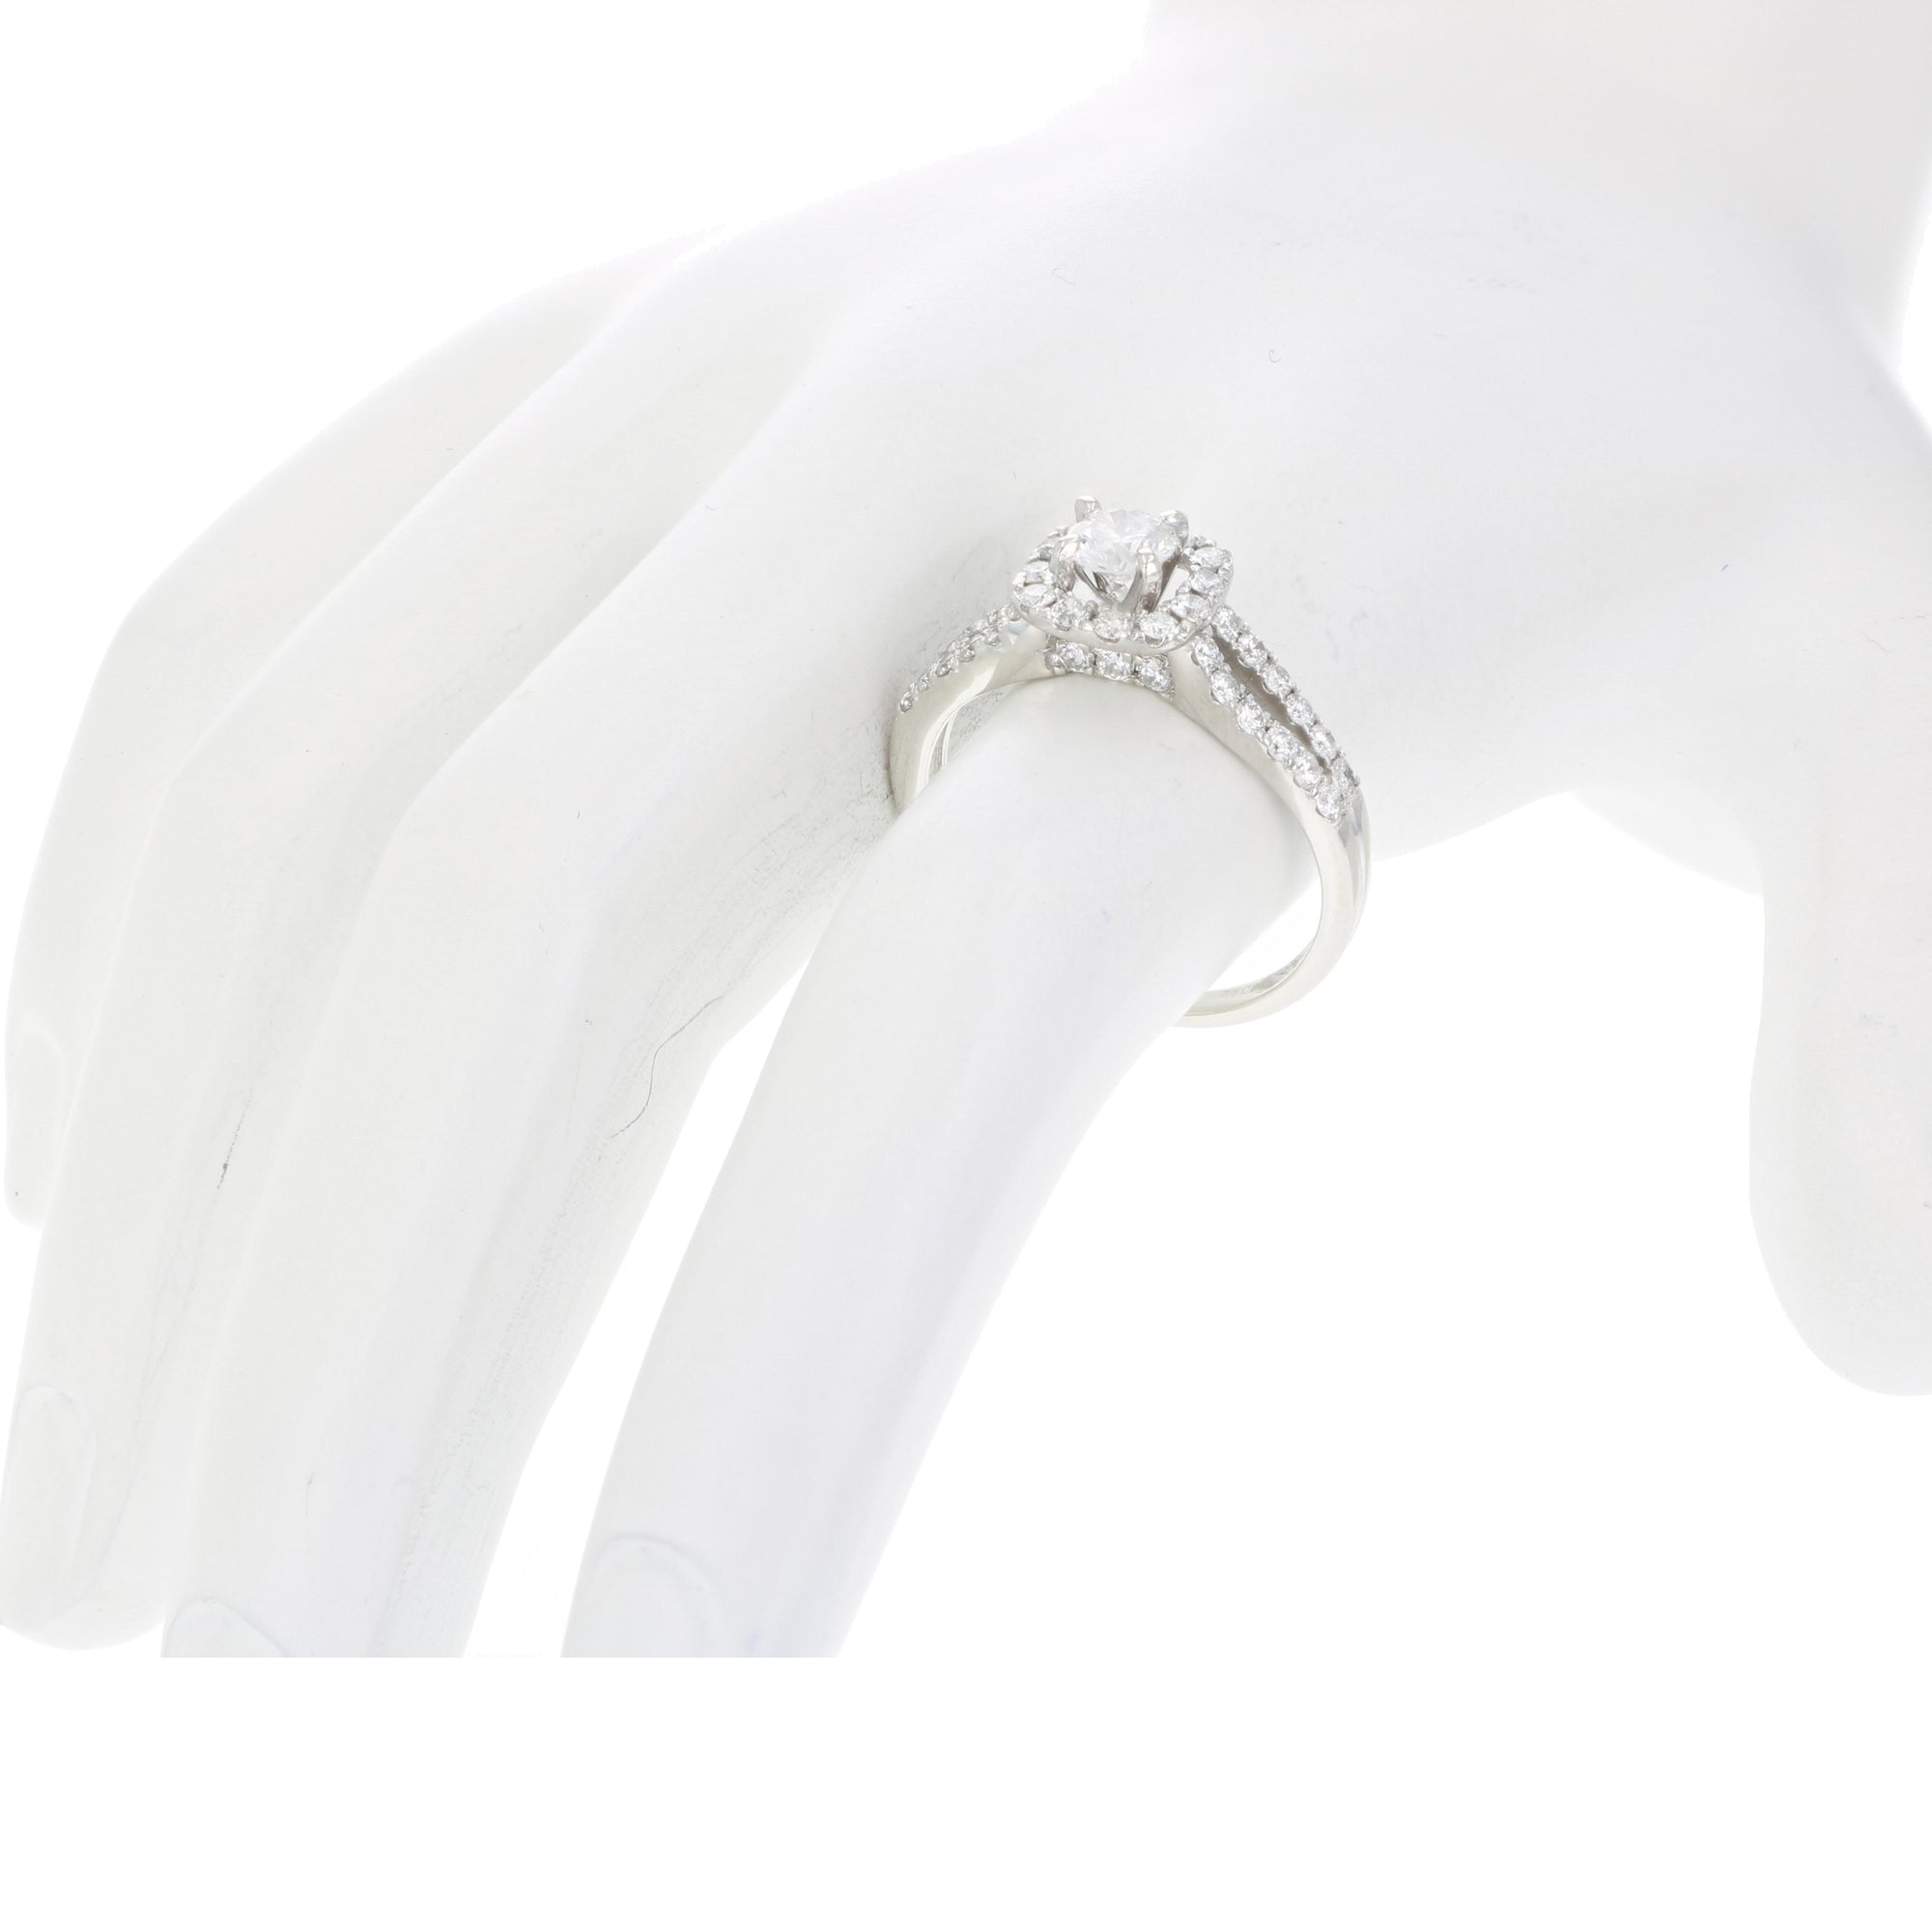 7/8 cttw Diamond Wedding Engagement Ring 14K White Gold Halo Bridal Style